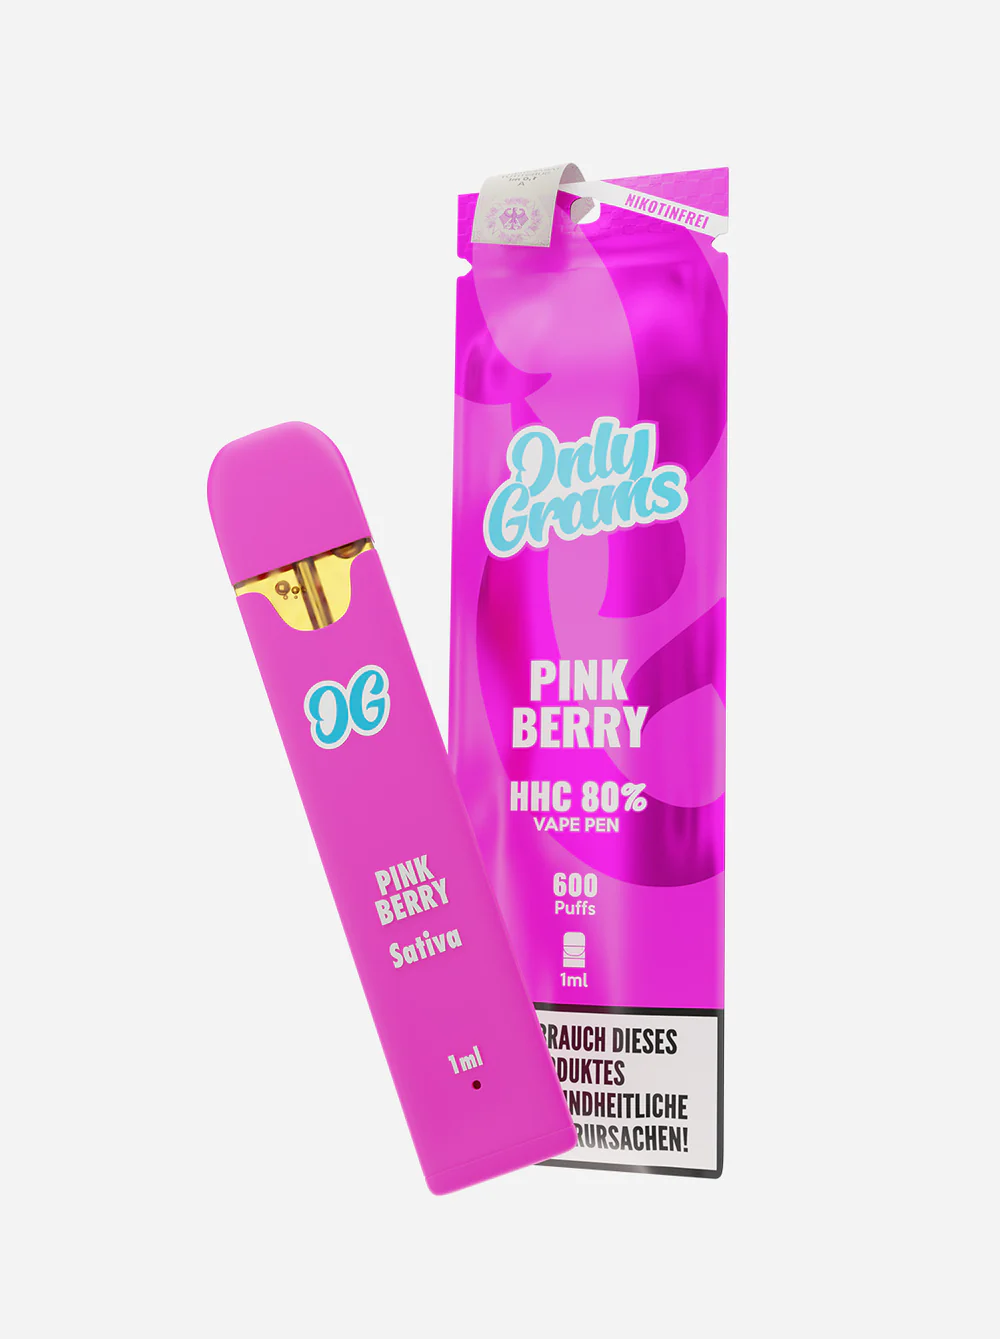 Only Grams - HHC Einweg E-Zigarette (600 Züge) - Pink Berry - 1ml